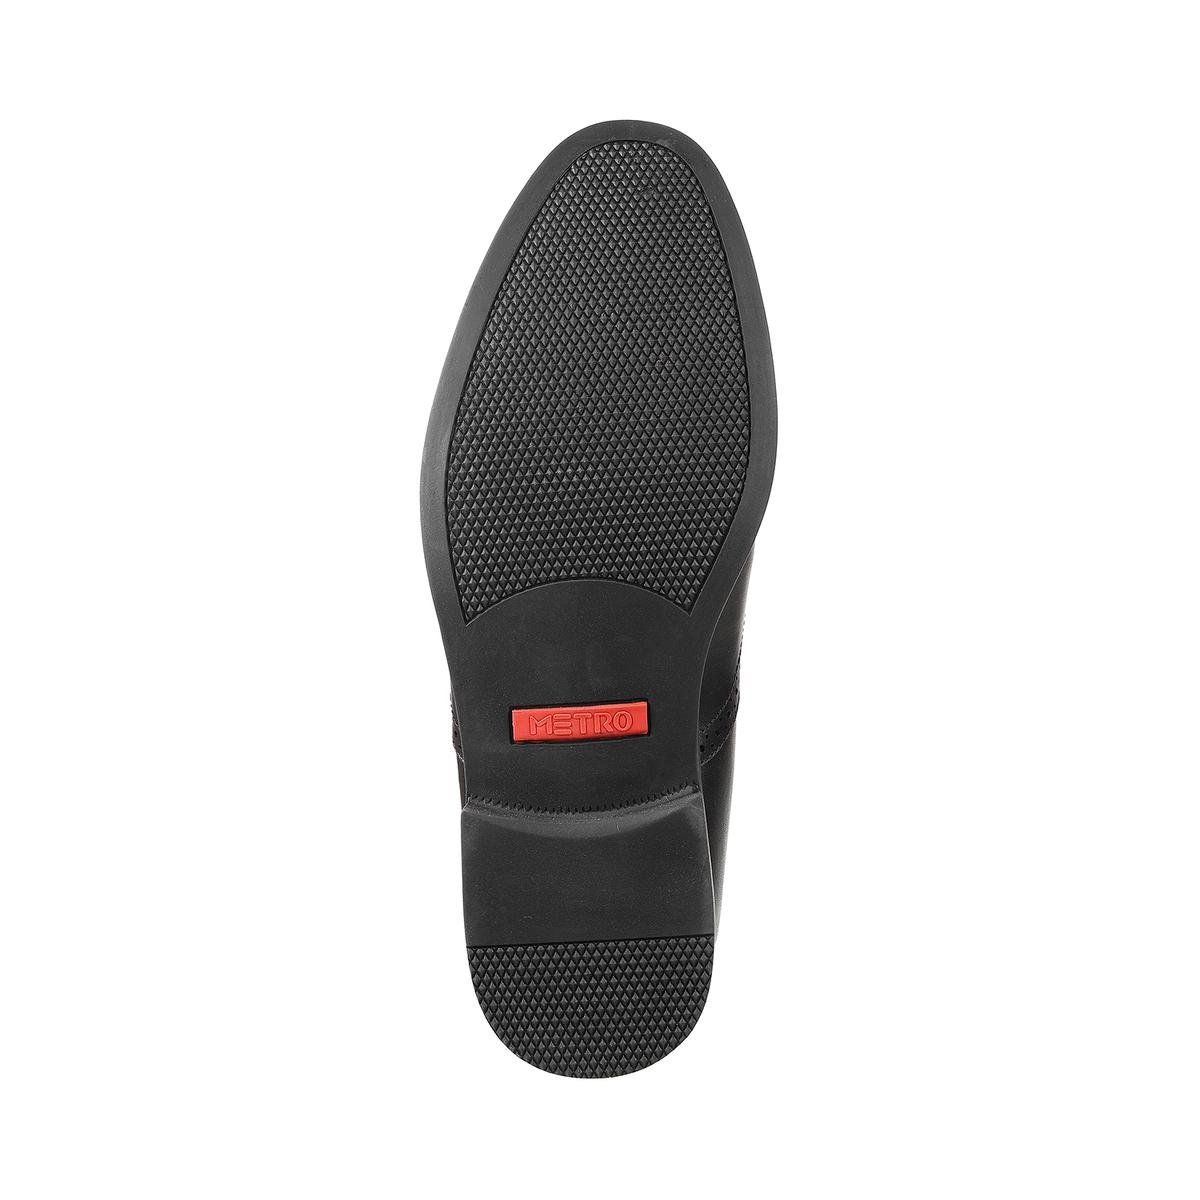 Buy Men Black Formal Brogue Online | SKU: 19-6829-11-40-Metro Shoes